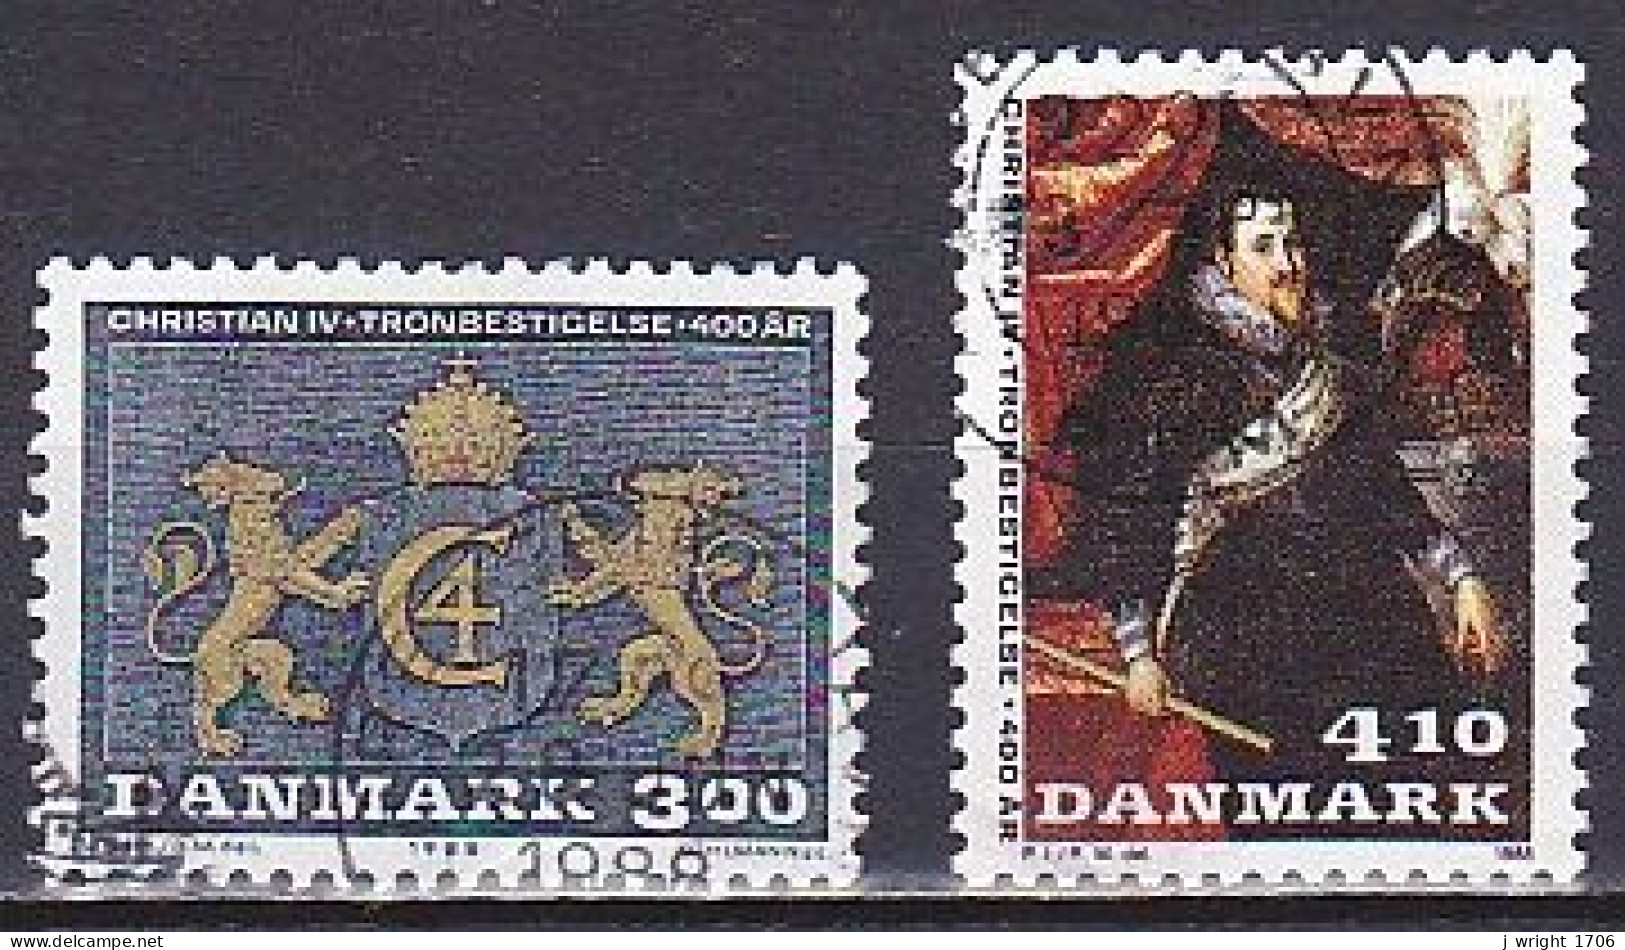 Denmark, 1988, King Christian IV Accession 400th Anniv, Set, USED - Usati